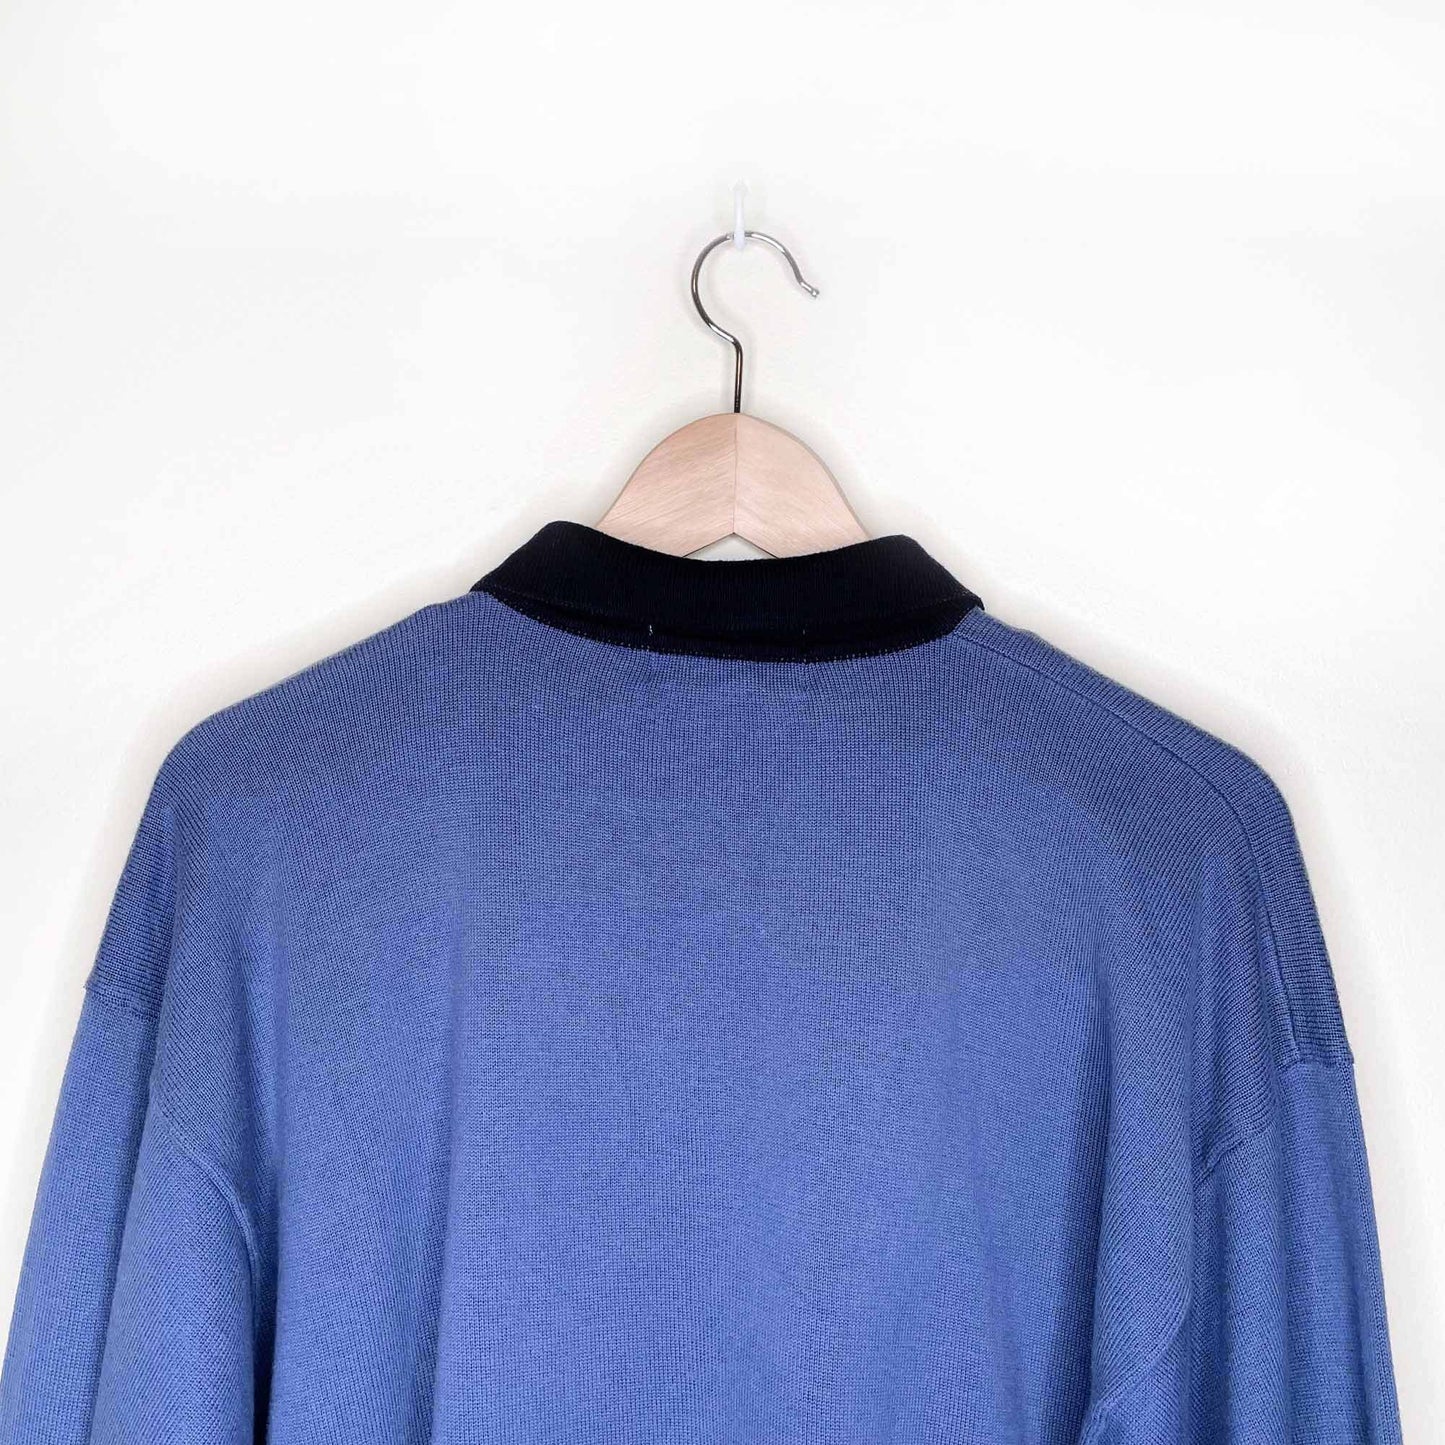 vintage men's yves saint laurent collared sweater - size large